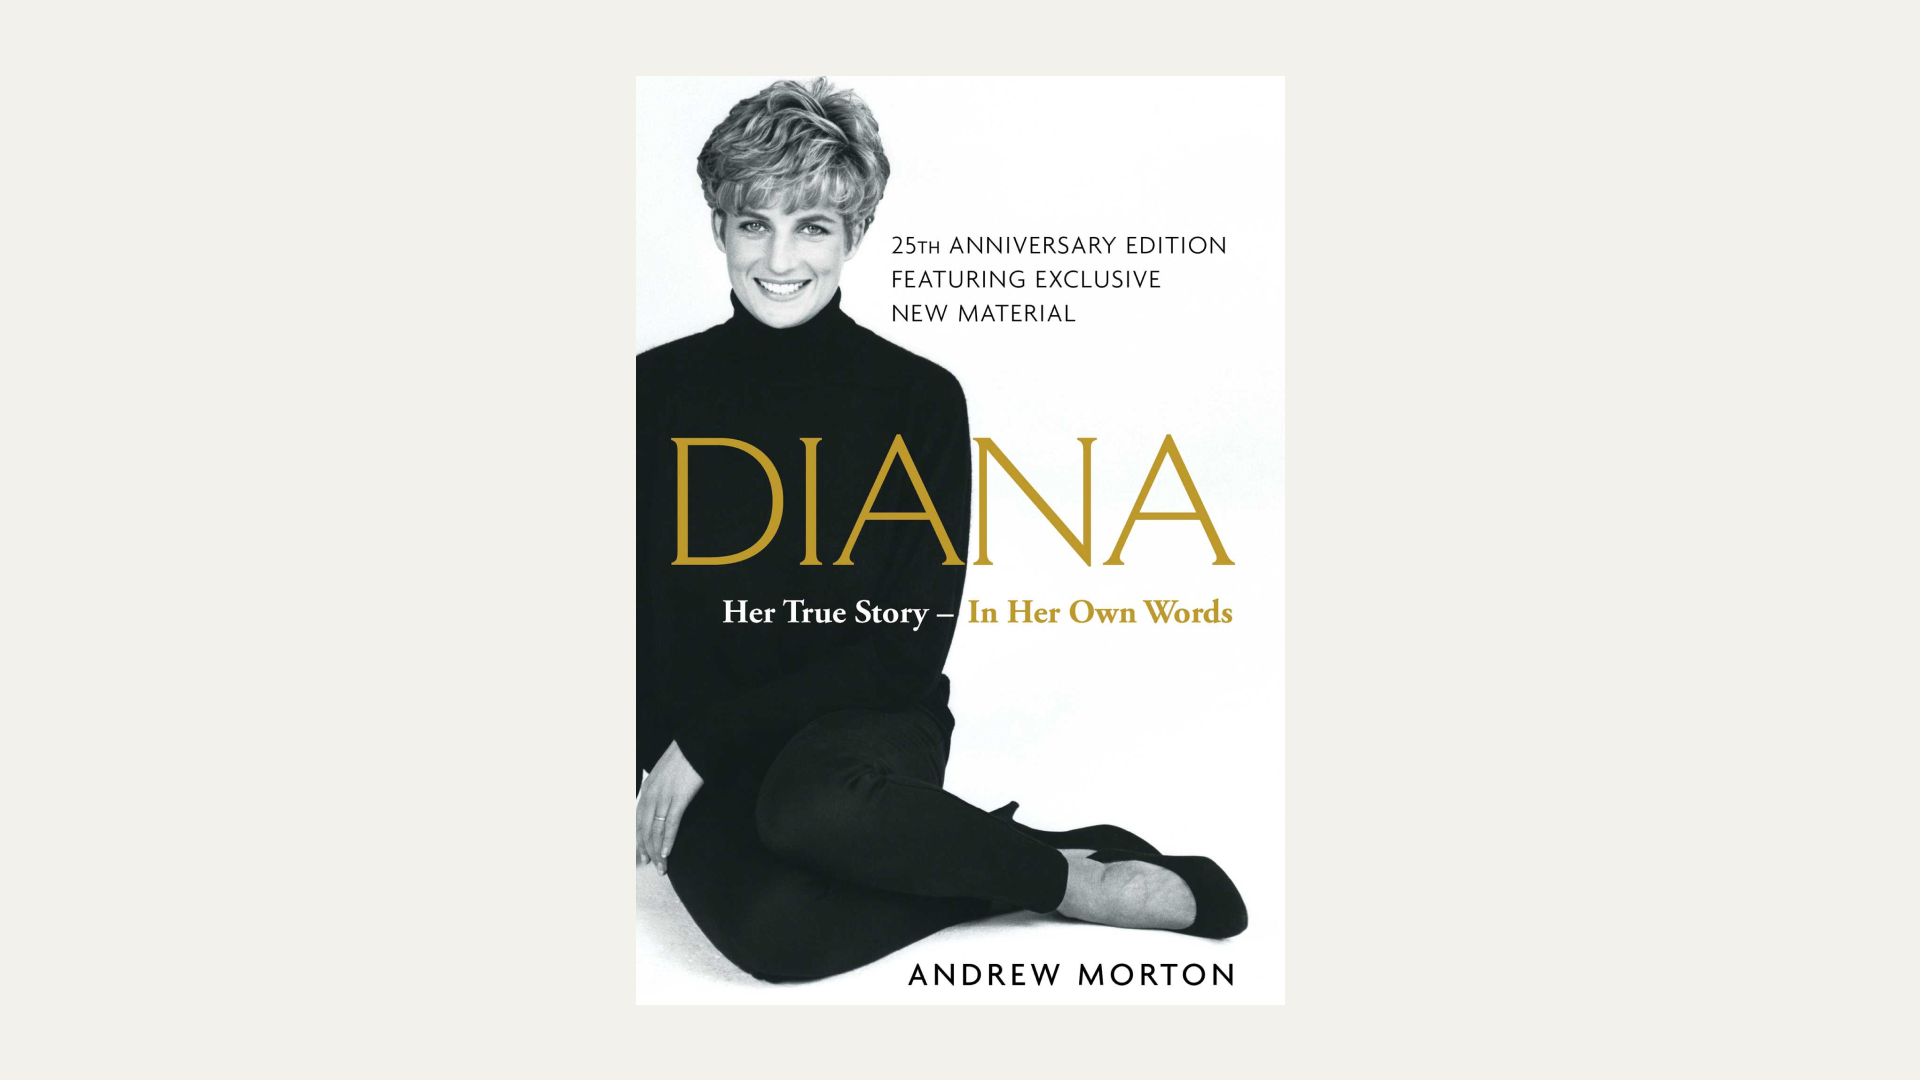 “Diana” by Andrew Morton